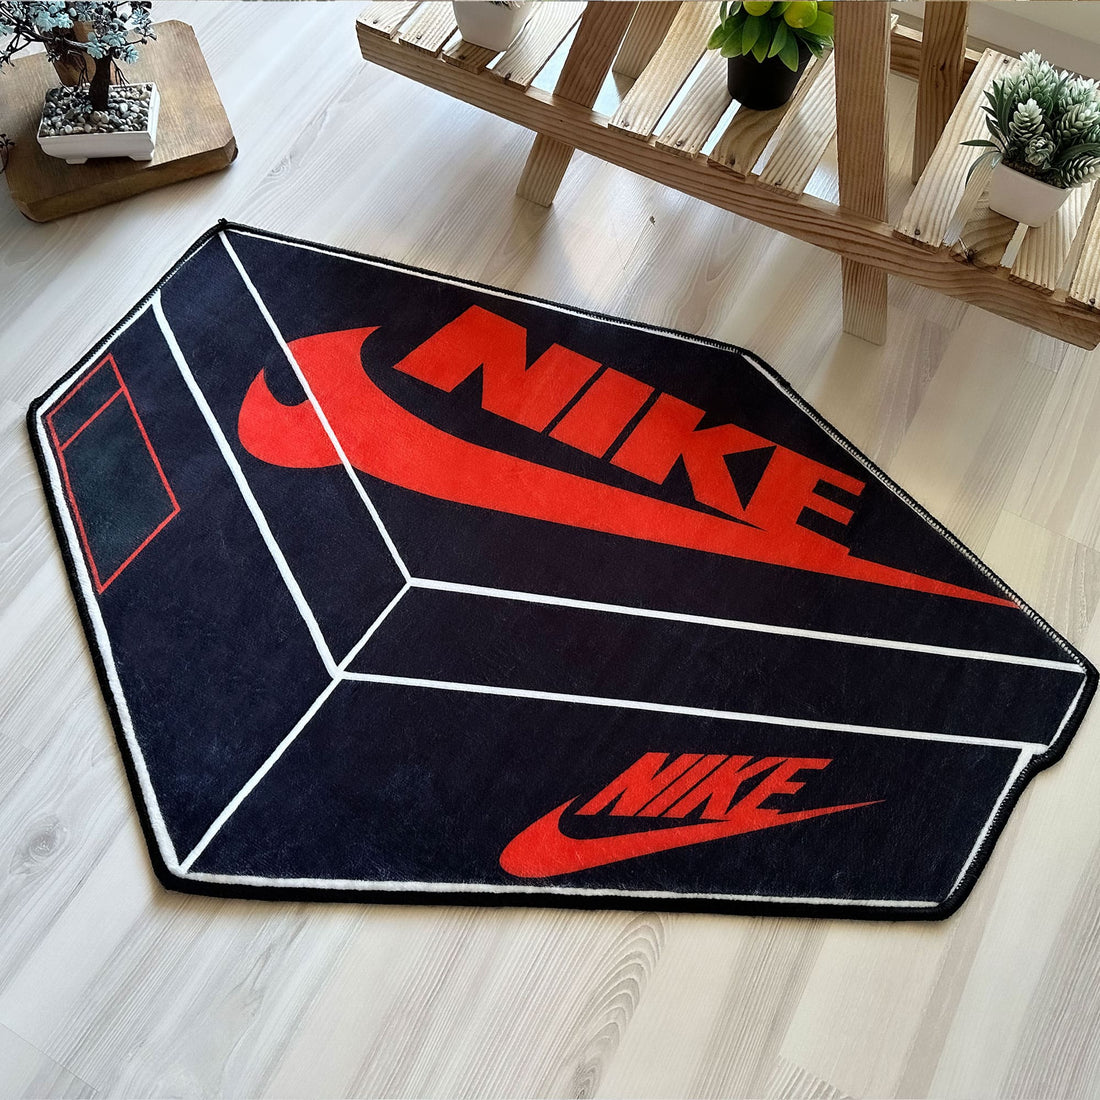 Siyah Nike Kutu Genç Odası Halı